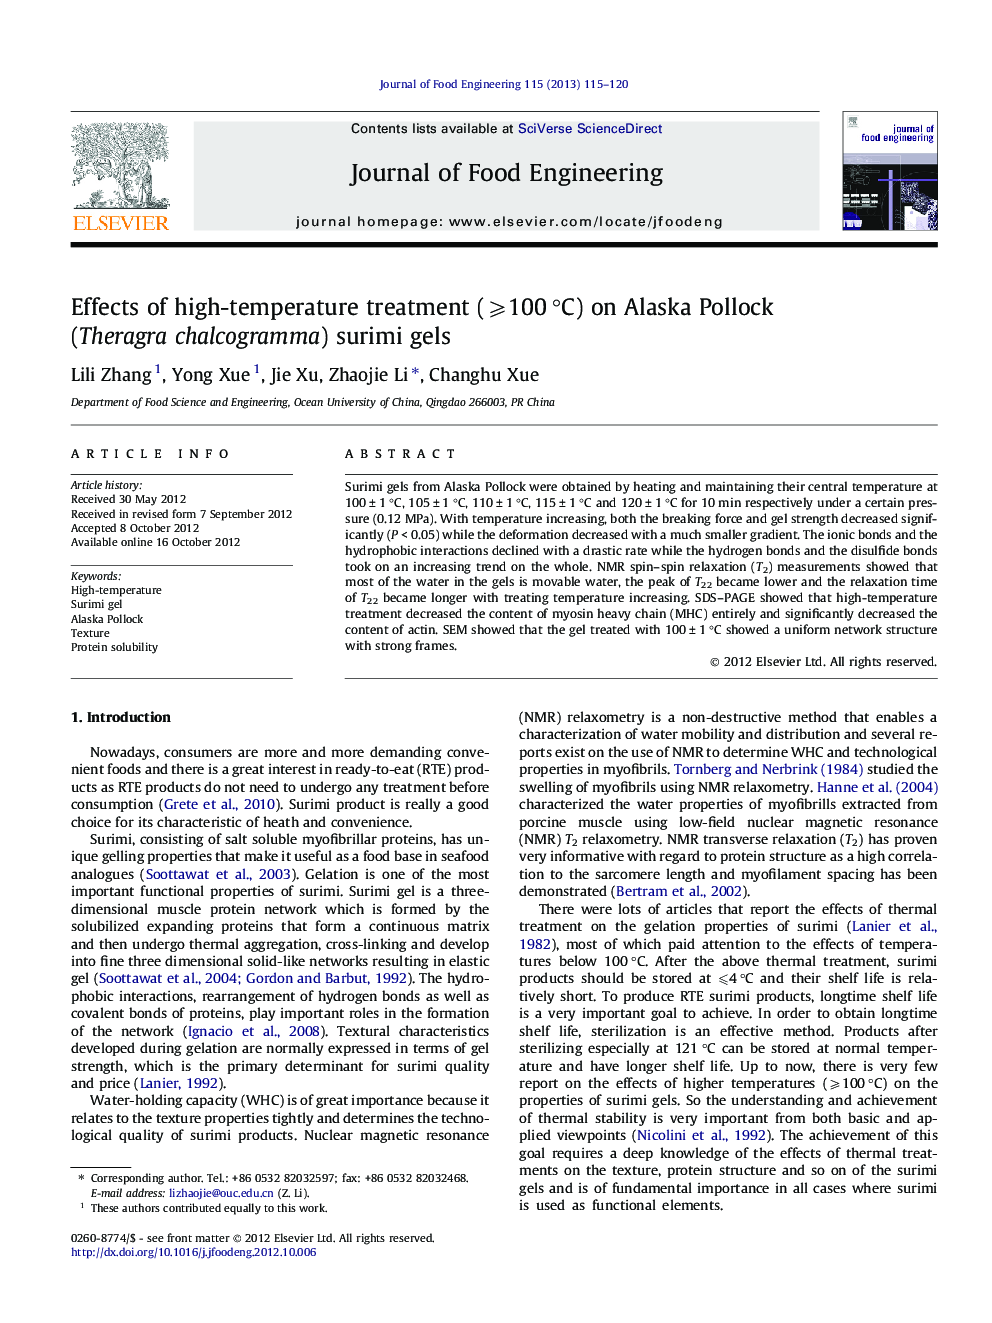 Effects of high-temperature treatment (⩾100 °C) on Alaska Pollock (Theragra chalcogramma) surimi gels